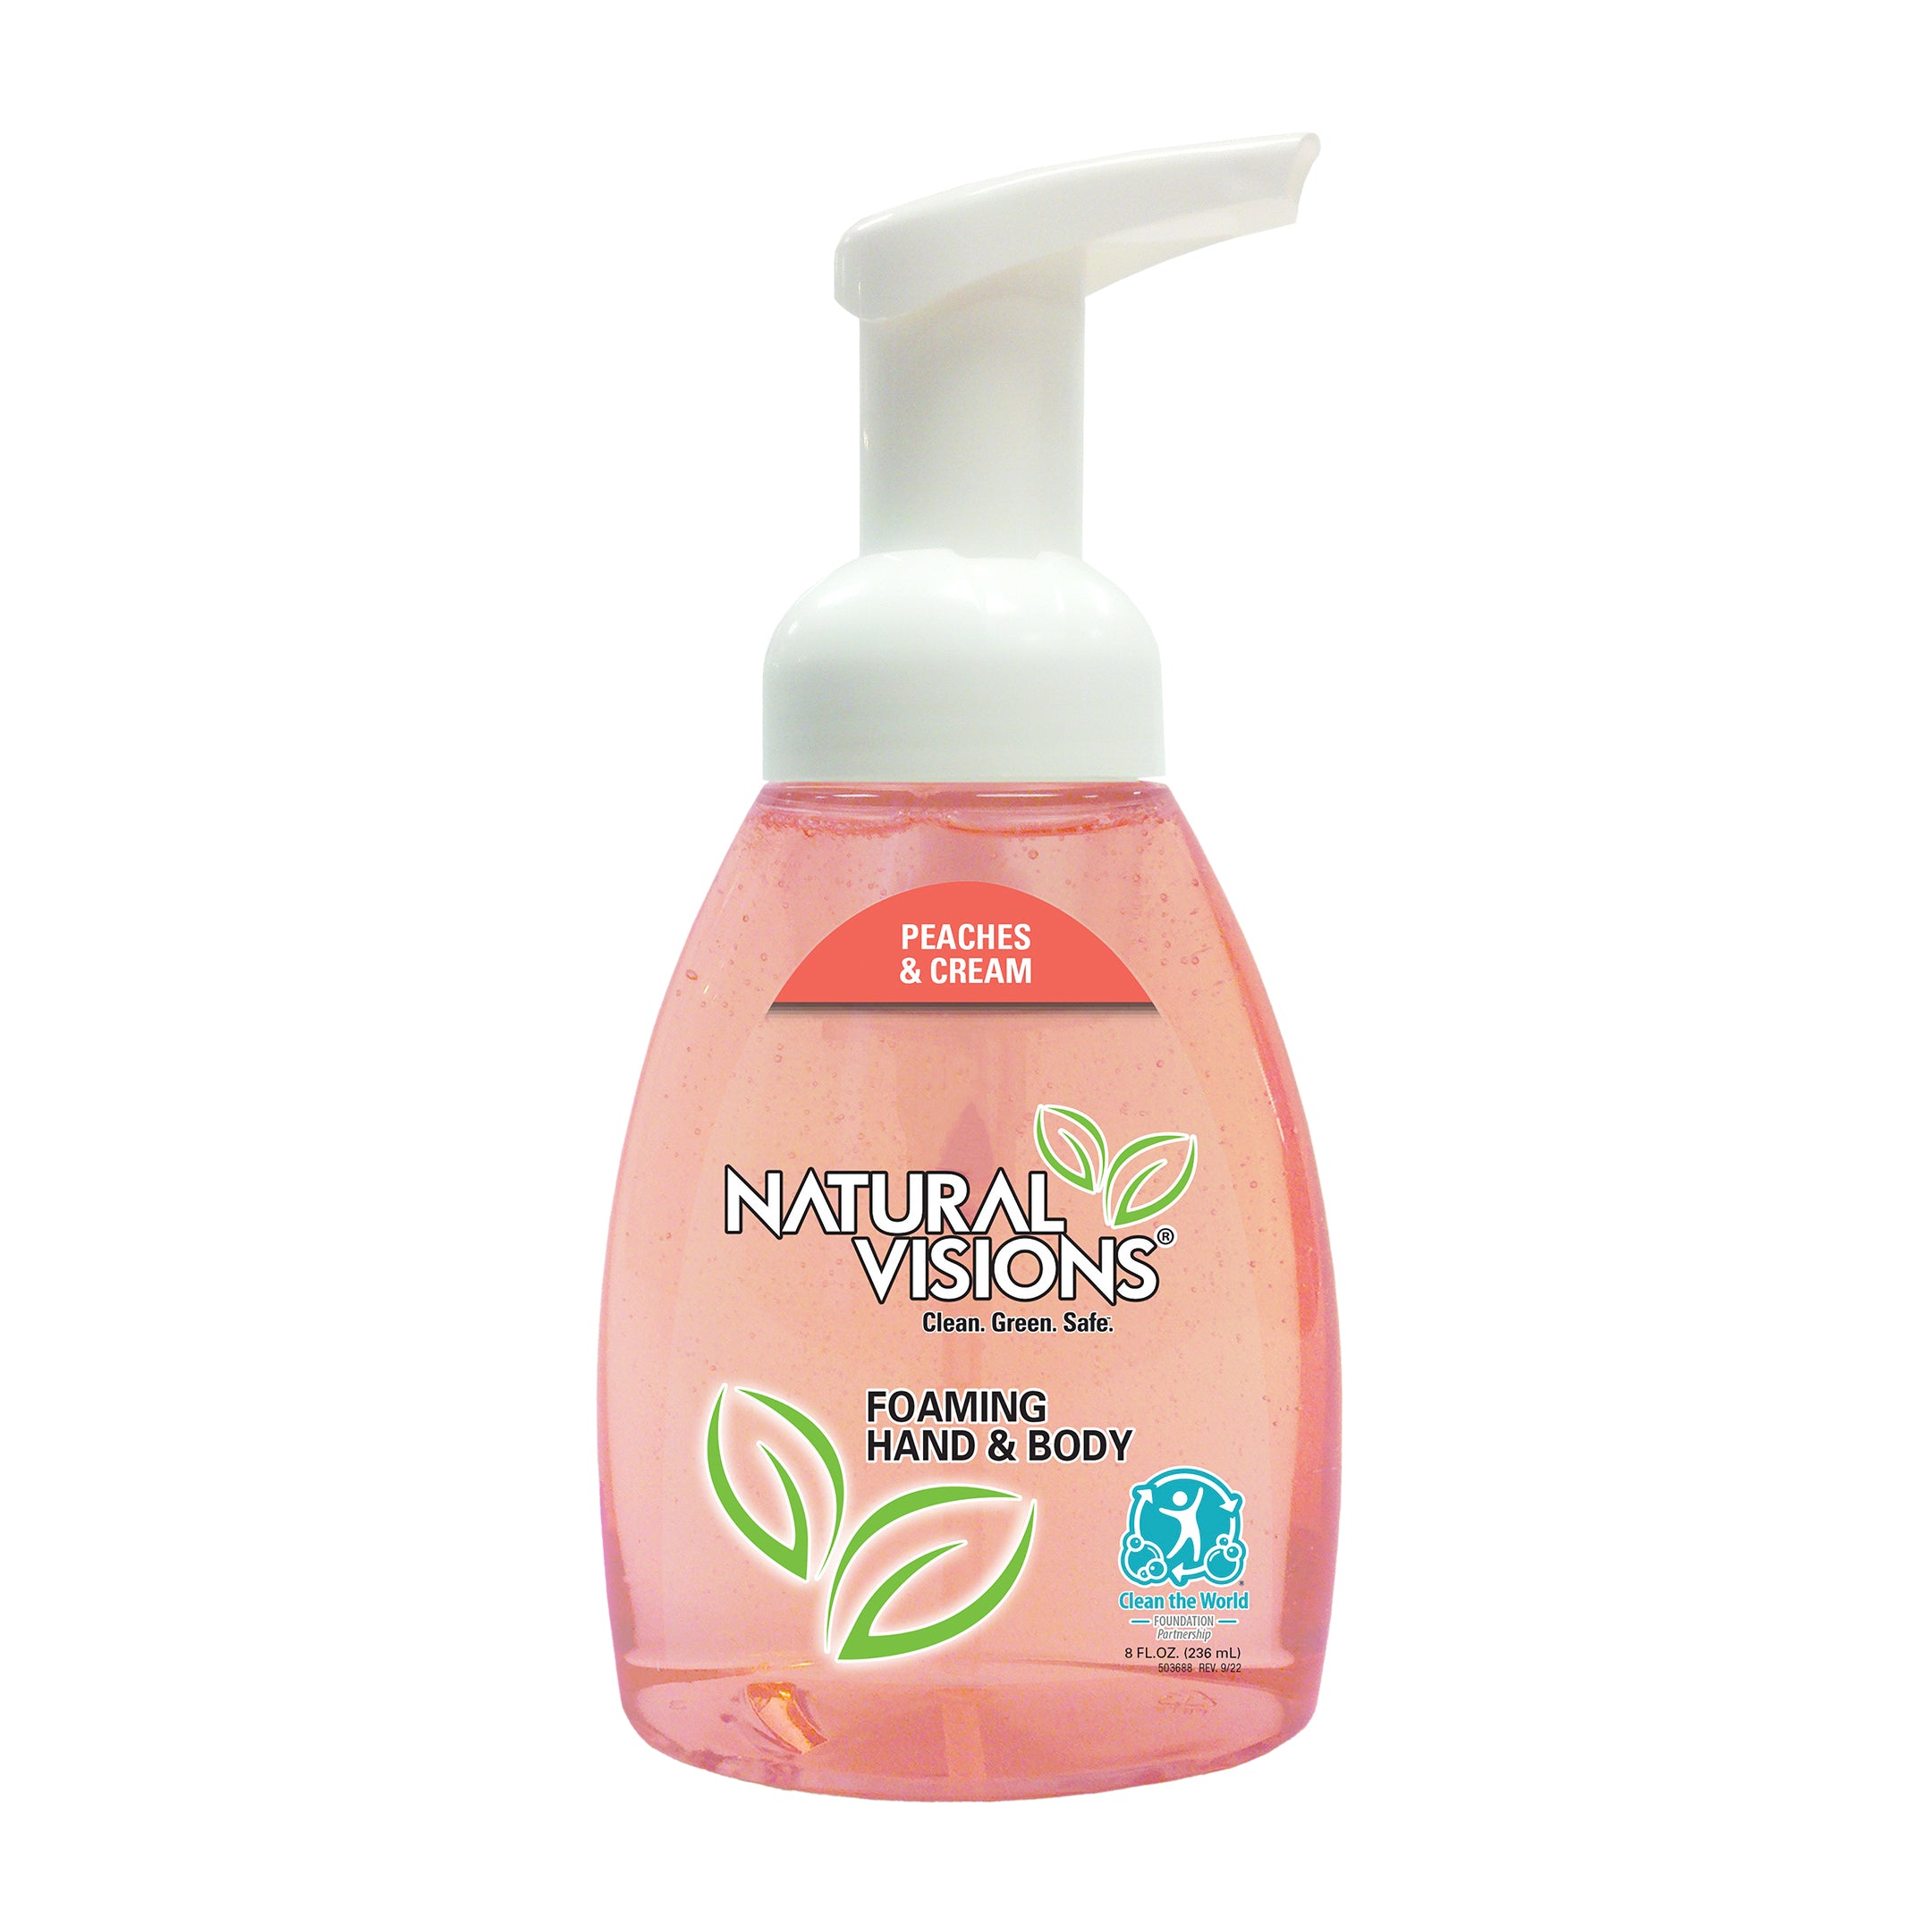 Natural Visions Peaches & Cream Foaming Hand & Body Soap - 8oz/6pk